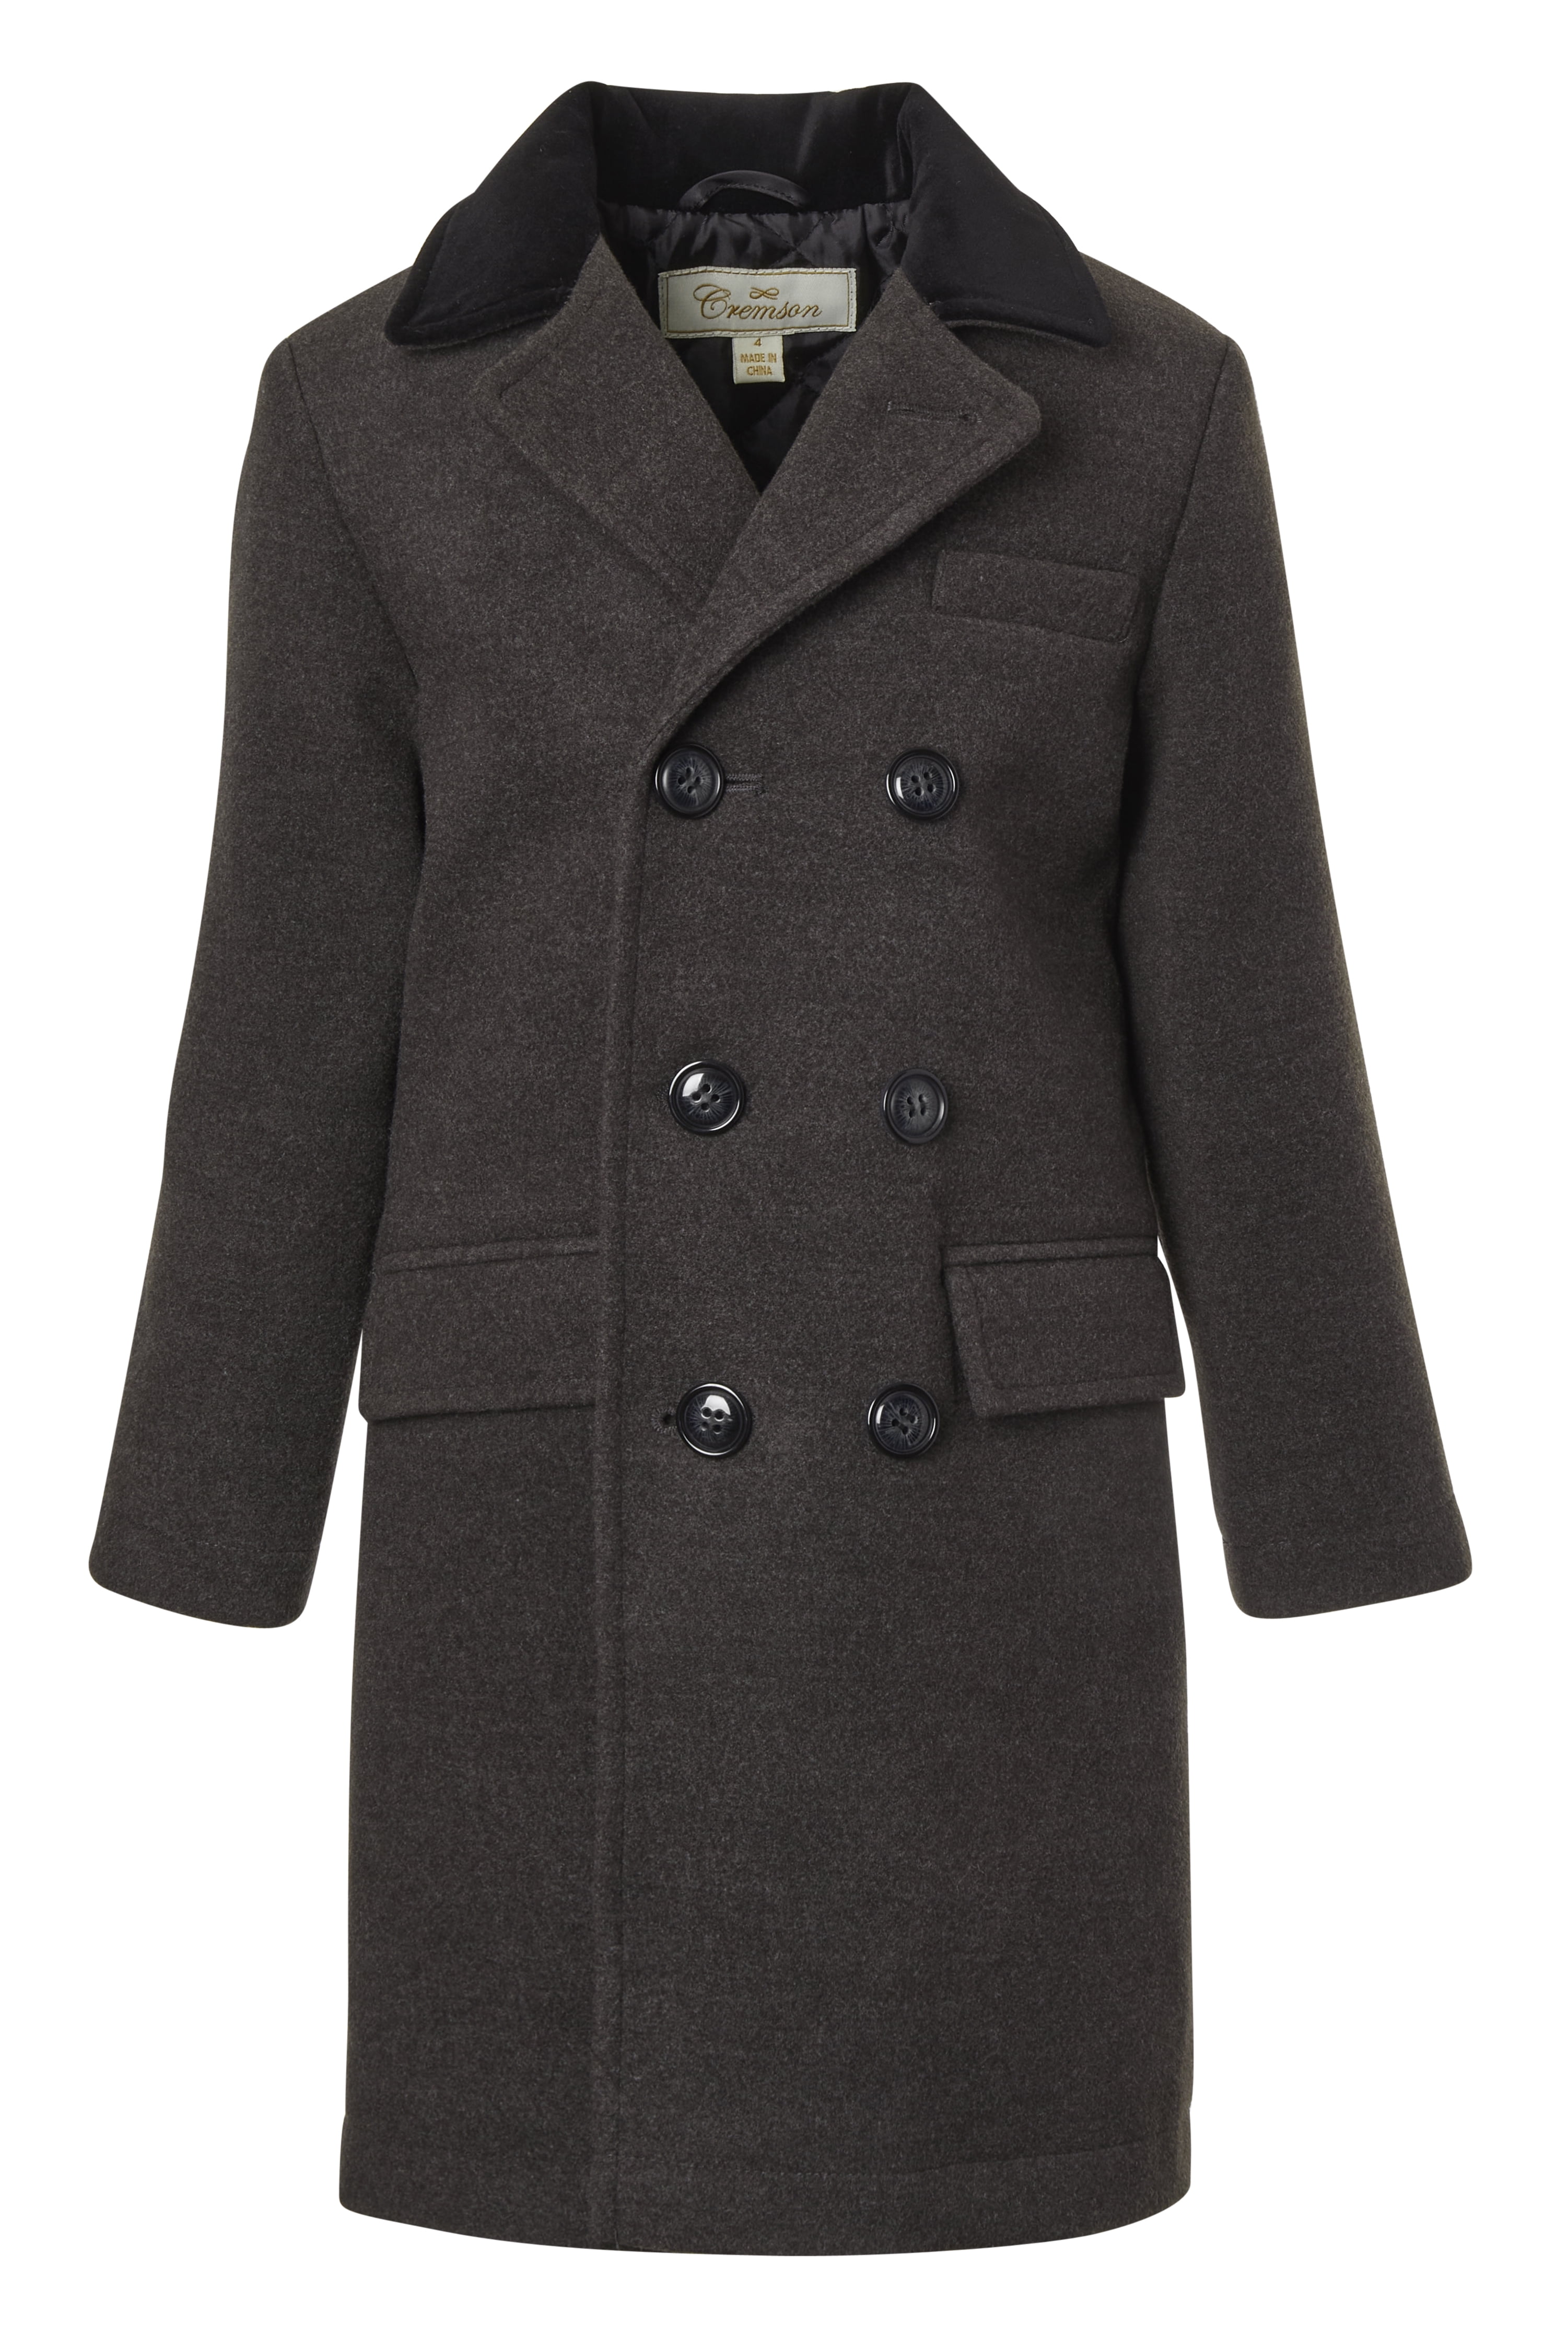 Cremson Boys Classic Wool Look Winter Double Breasted John Dress Coat Jacket Hat 